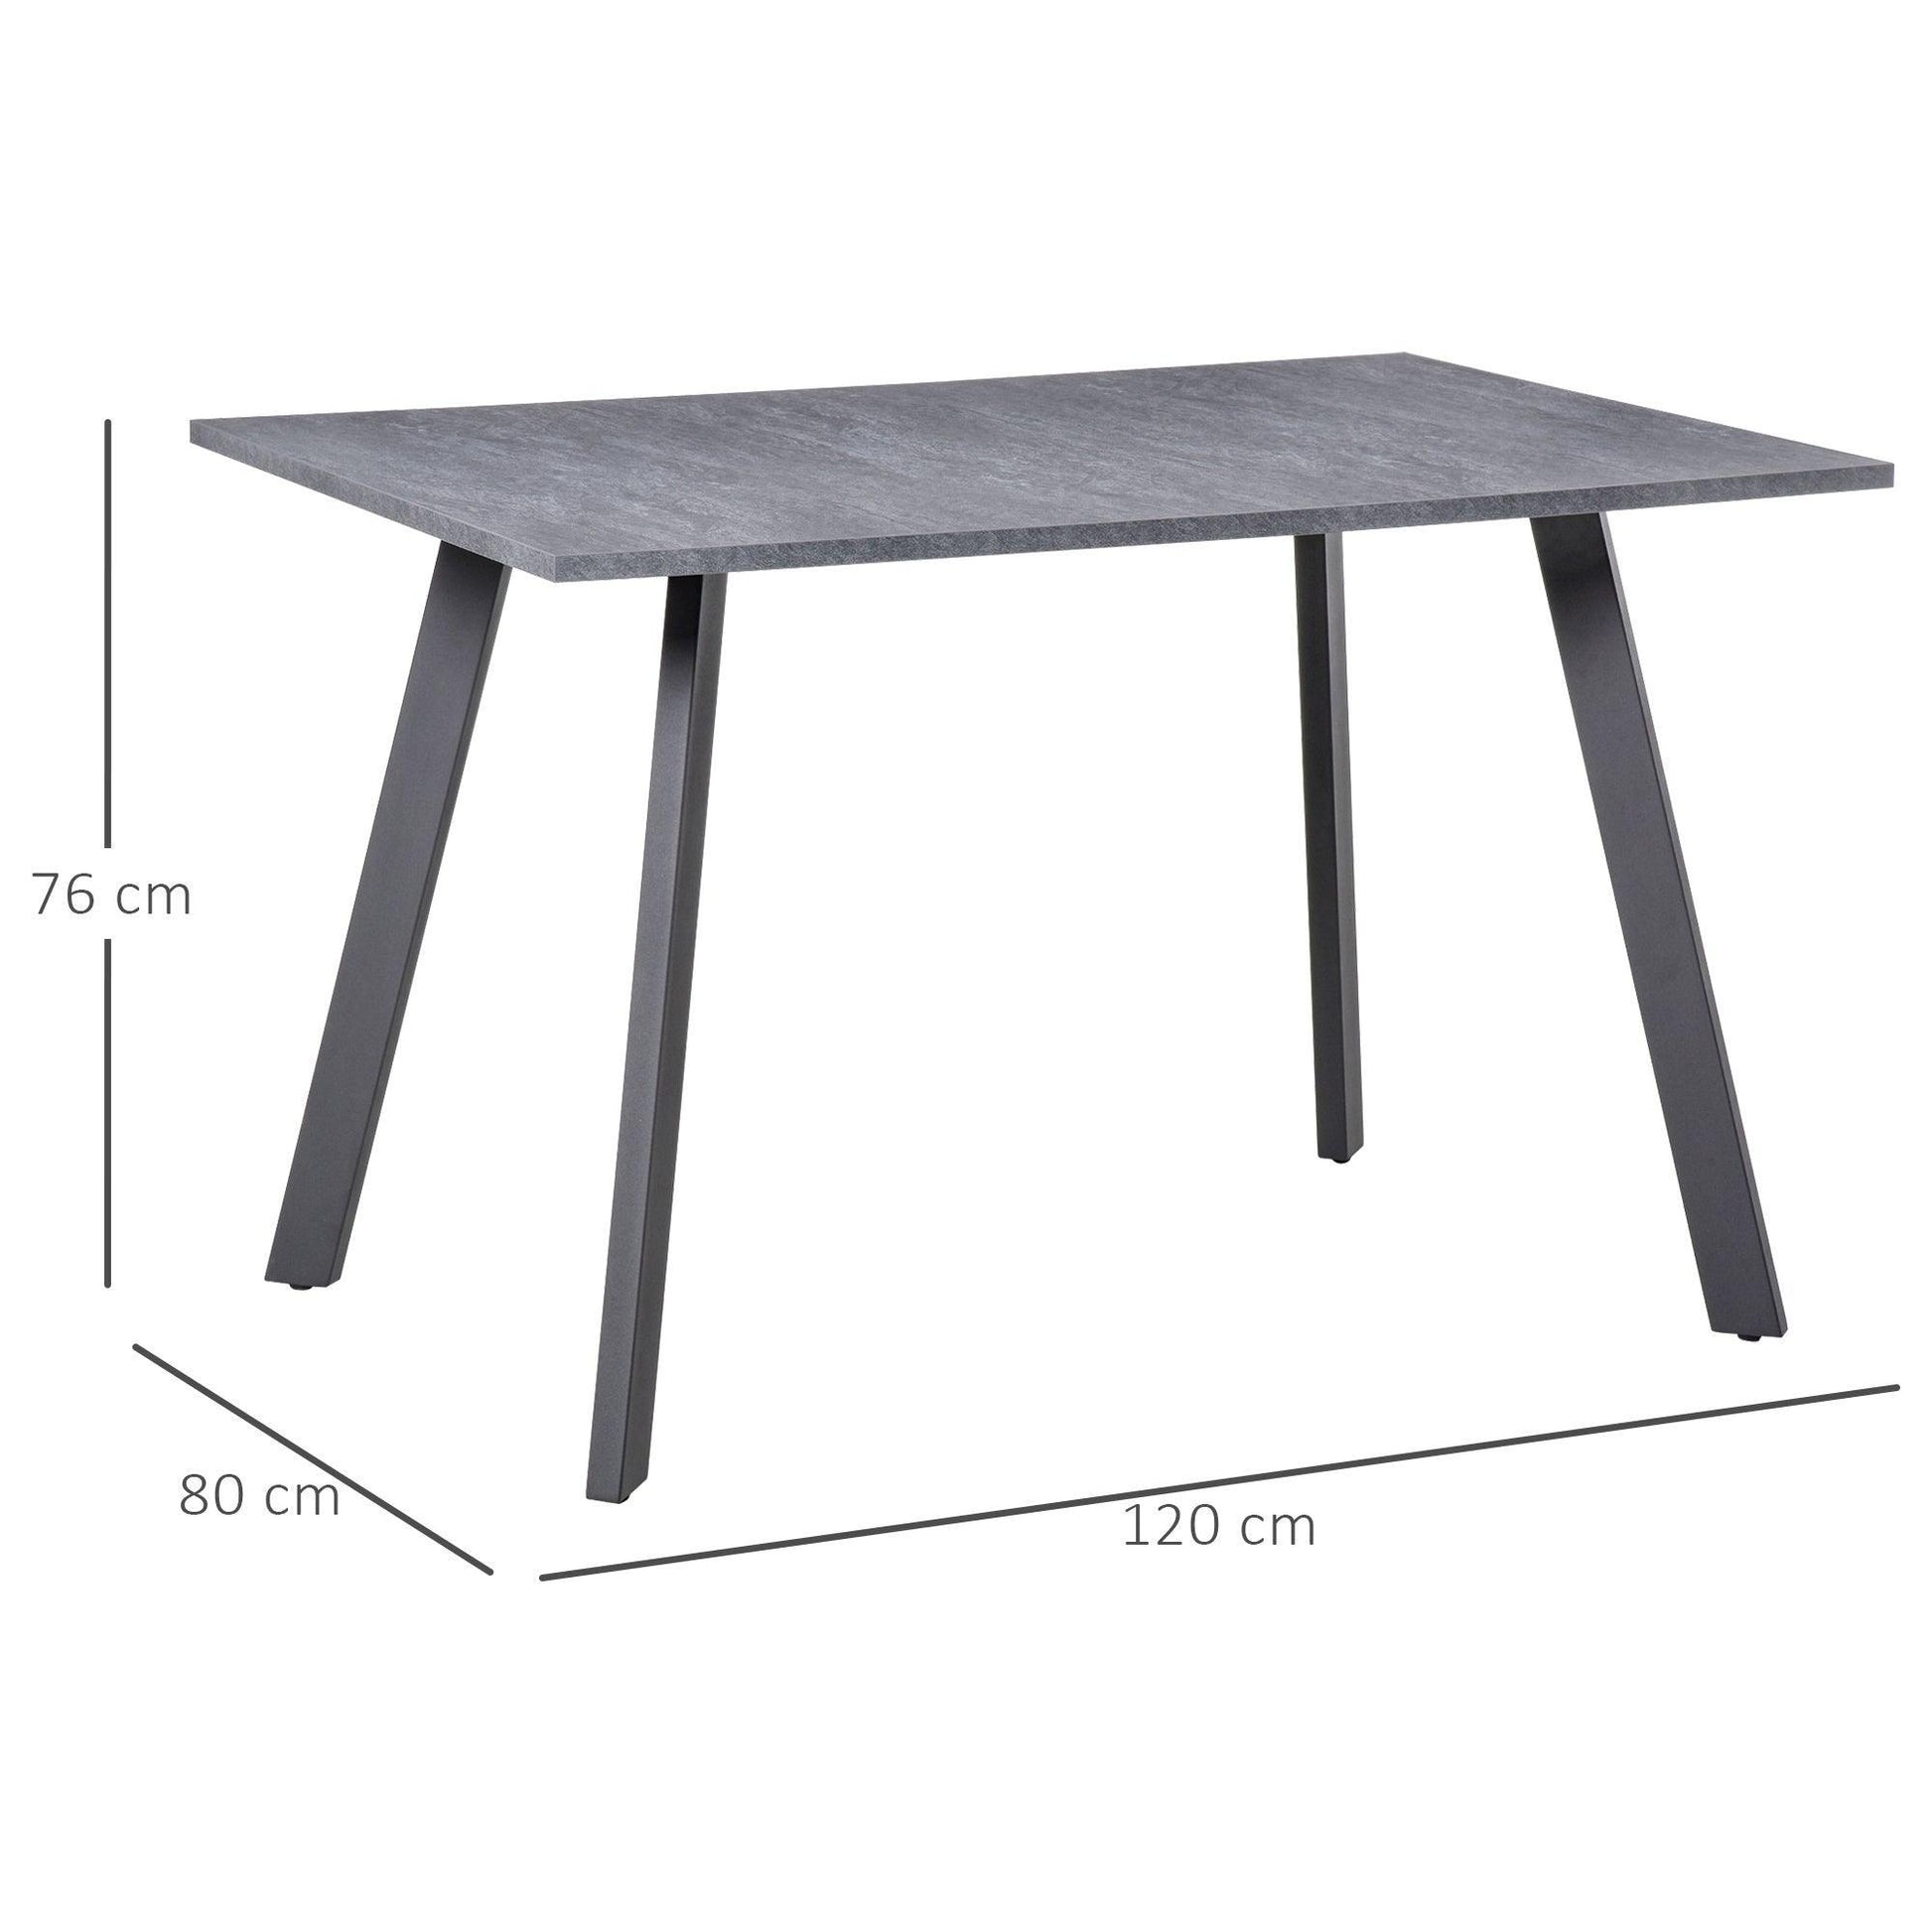 HOMCOM Dining Table: Metal Legs, Spacious, Dark Grey - ALL4U RETAILER LTD